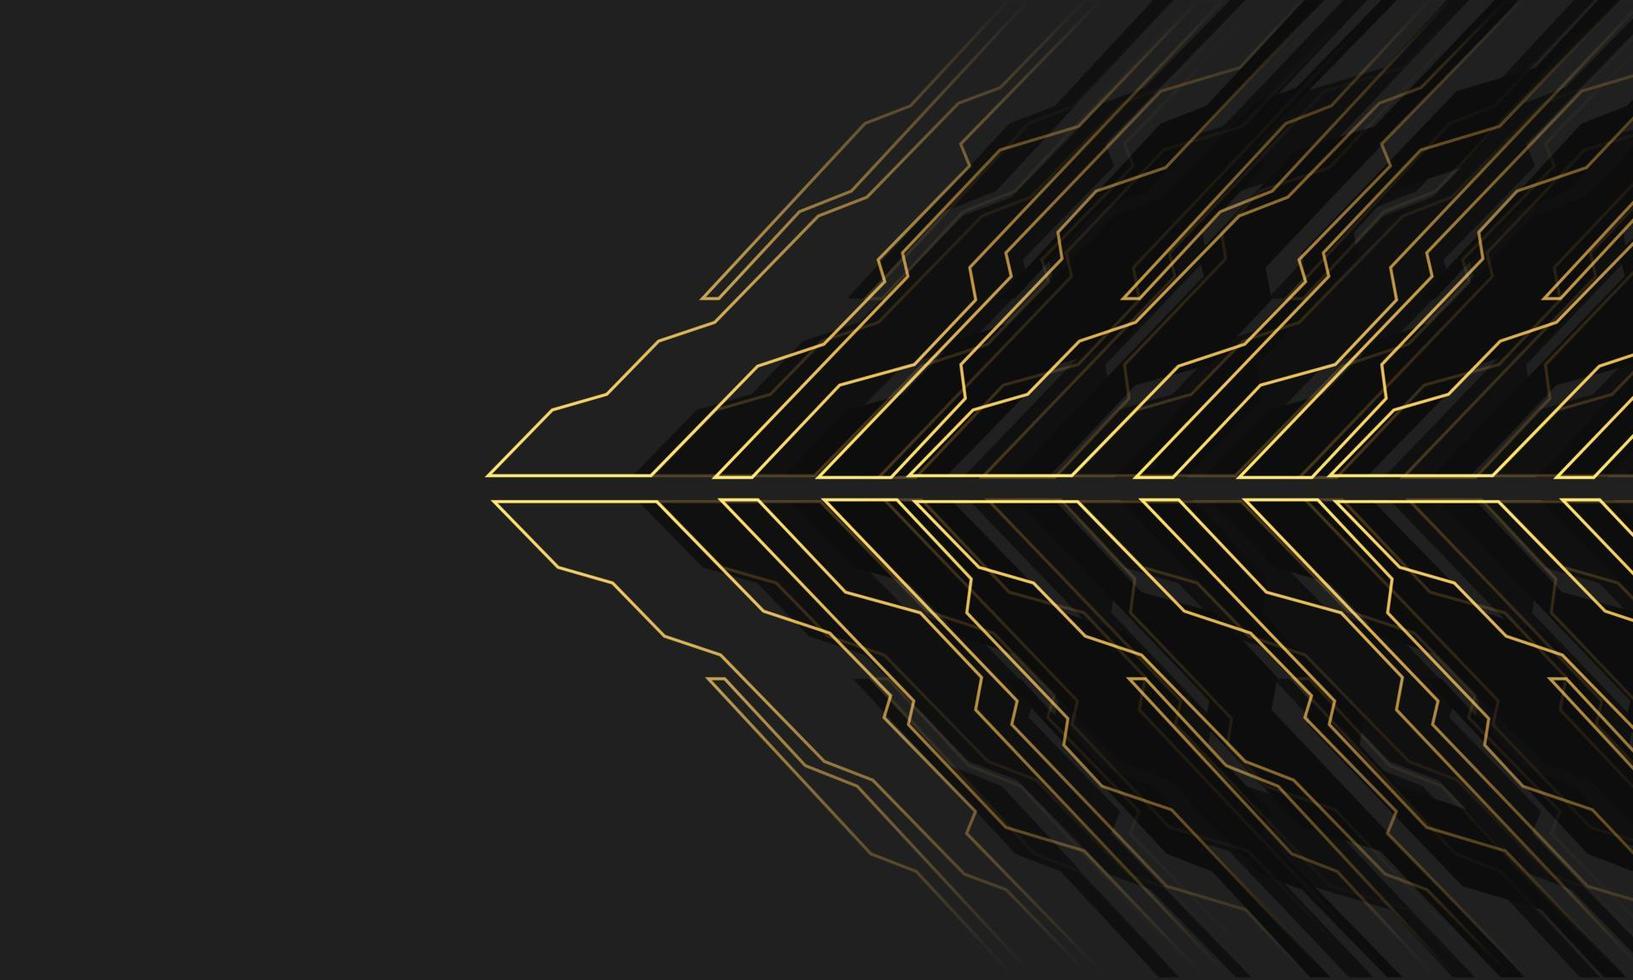 tecnología futurista de flecha cibernética de línea dorada abstracta con diseño de espacio en blanco vector de fondo creativo moderno